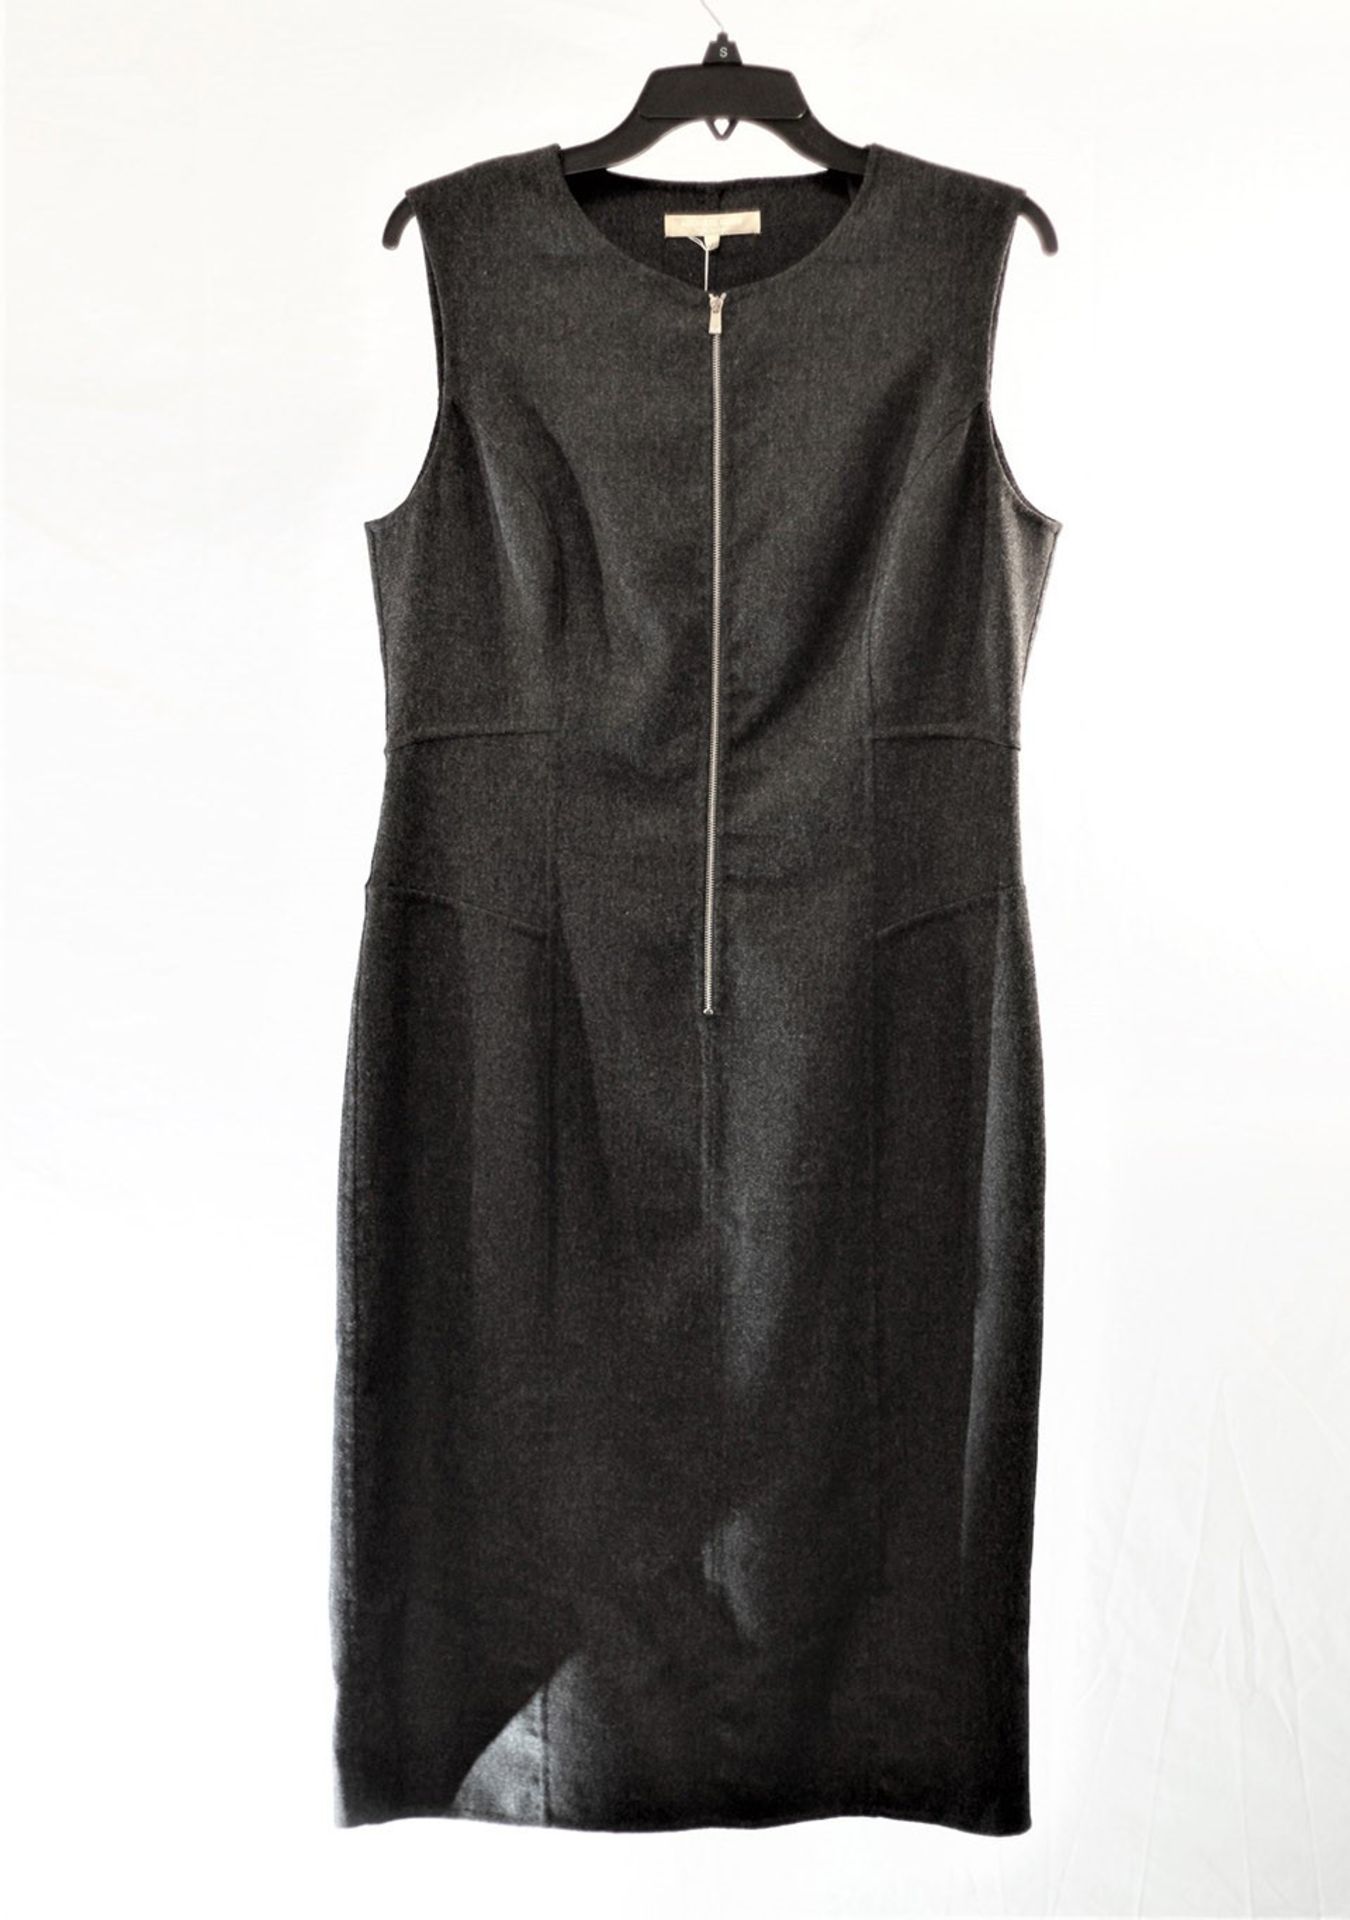 1 x Michael Kors Grey Dress - Size: 14 - Material: 97% Virgin Wool, 2% Spandex, 1% Elastic